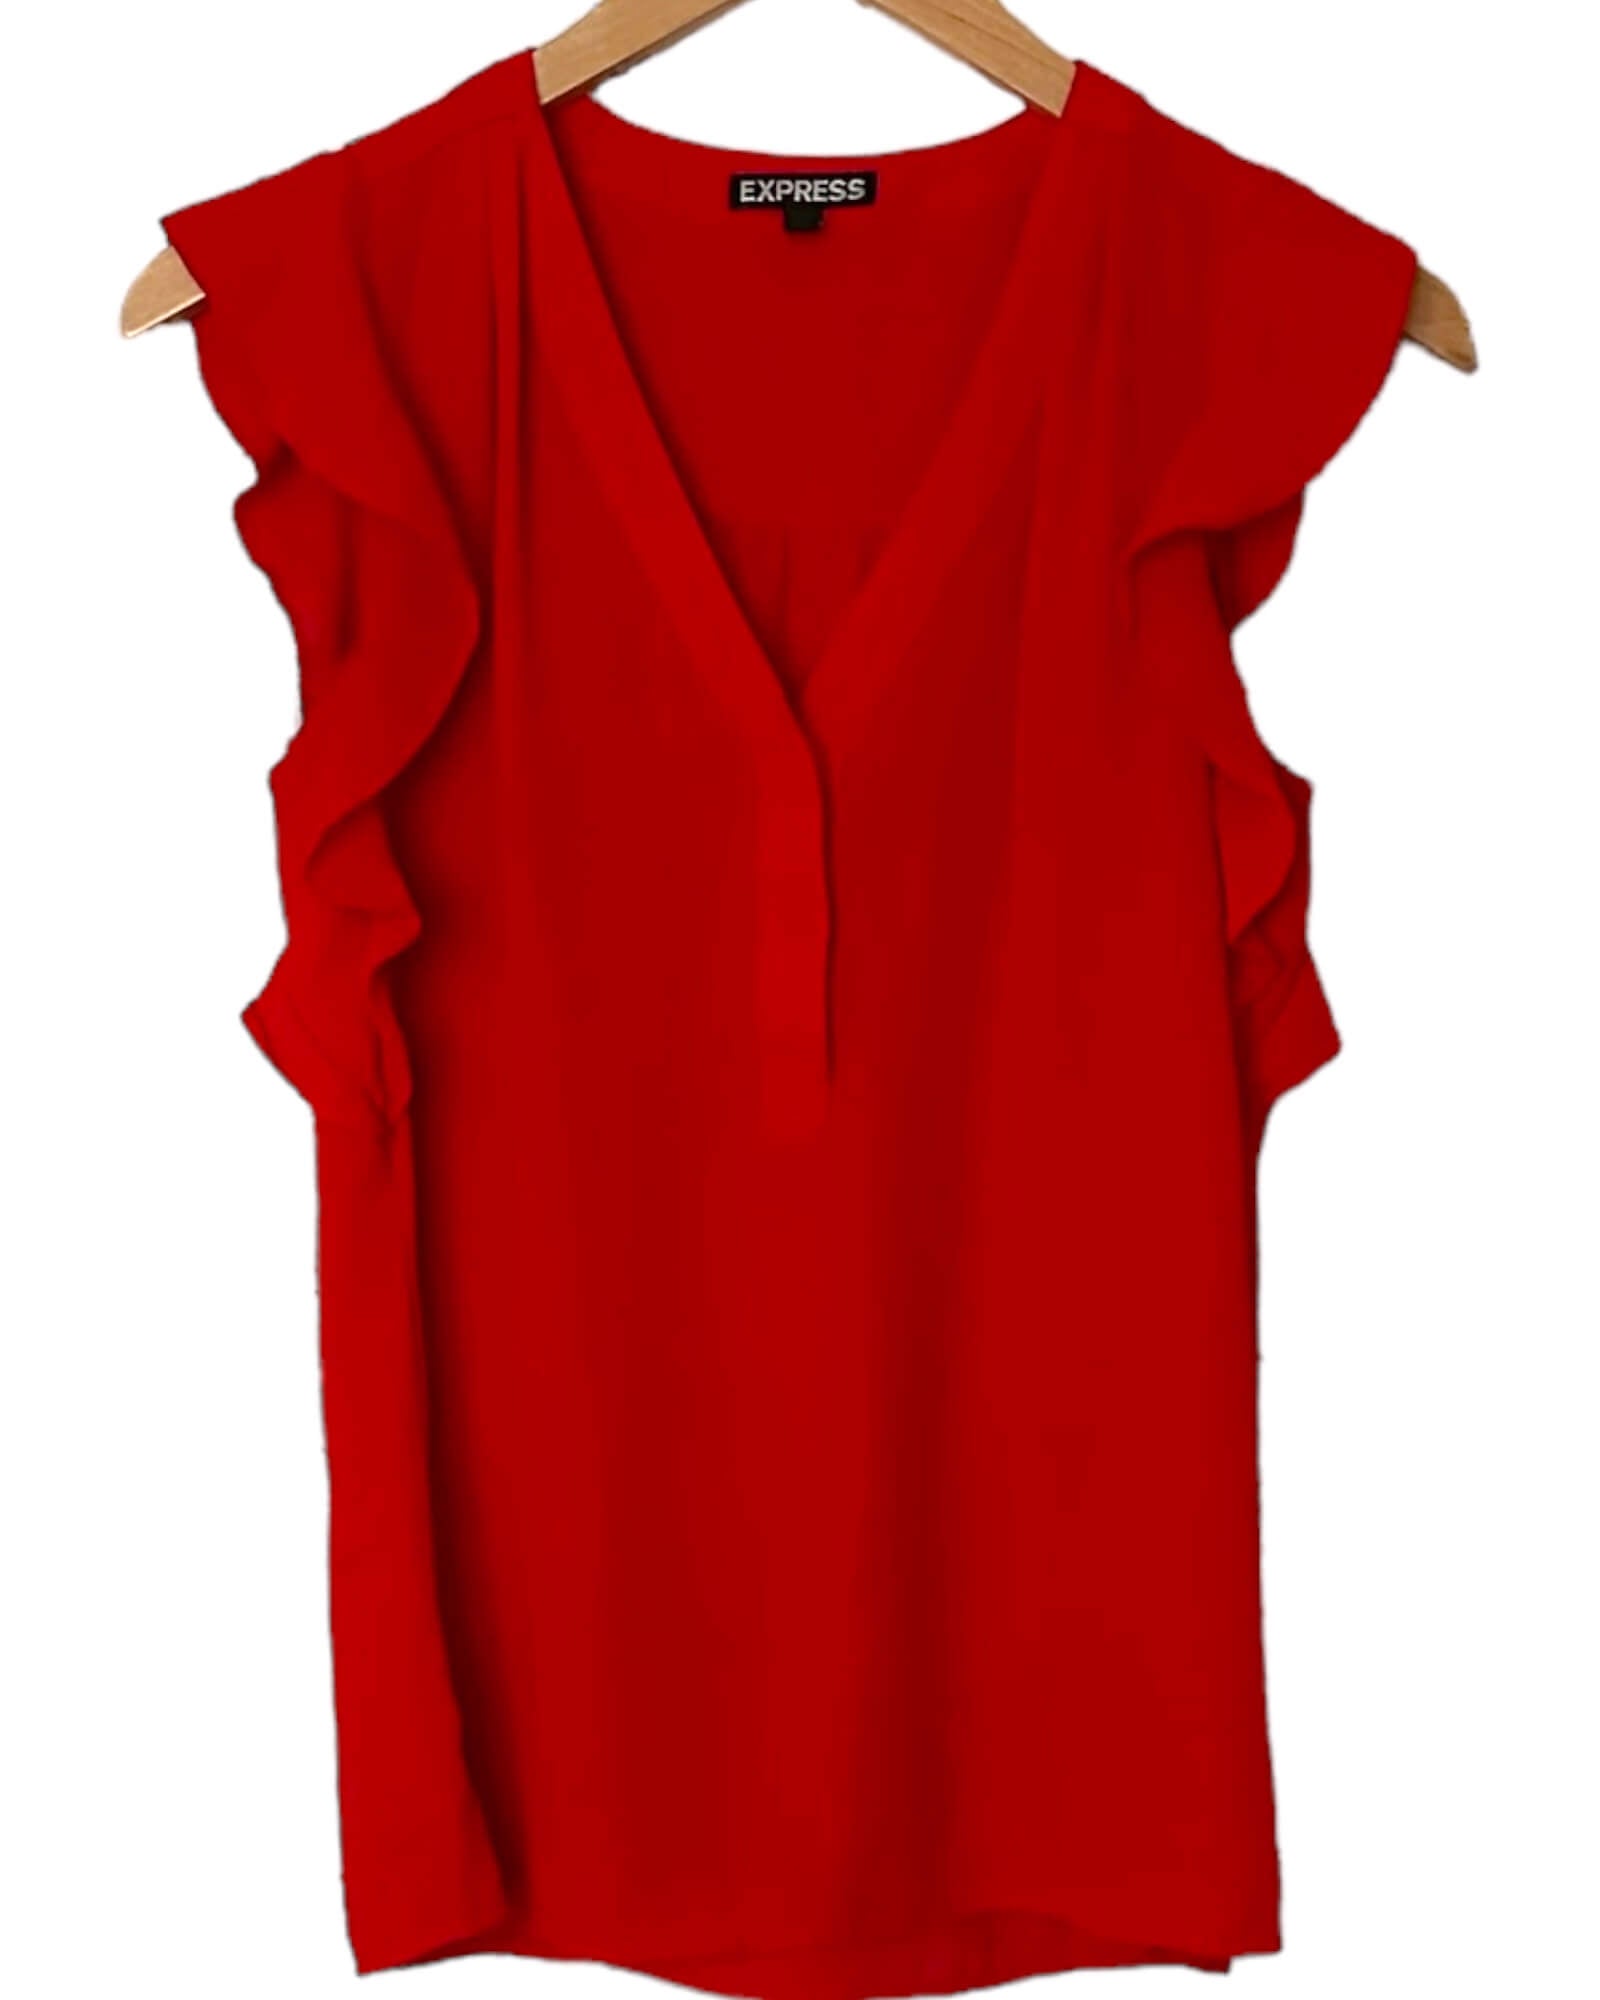 Warm Autumn EXPRESS blaze red ruffle sleeve v-neck blouse